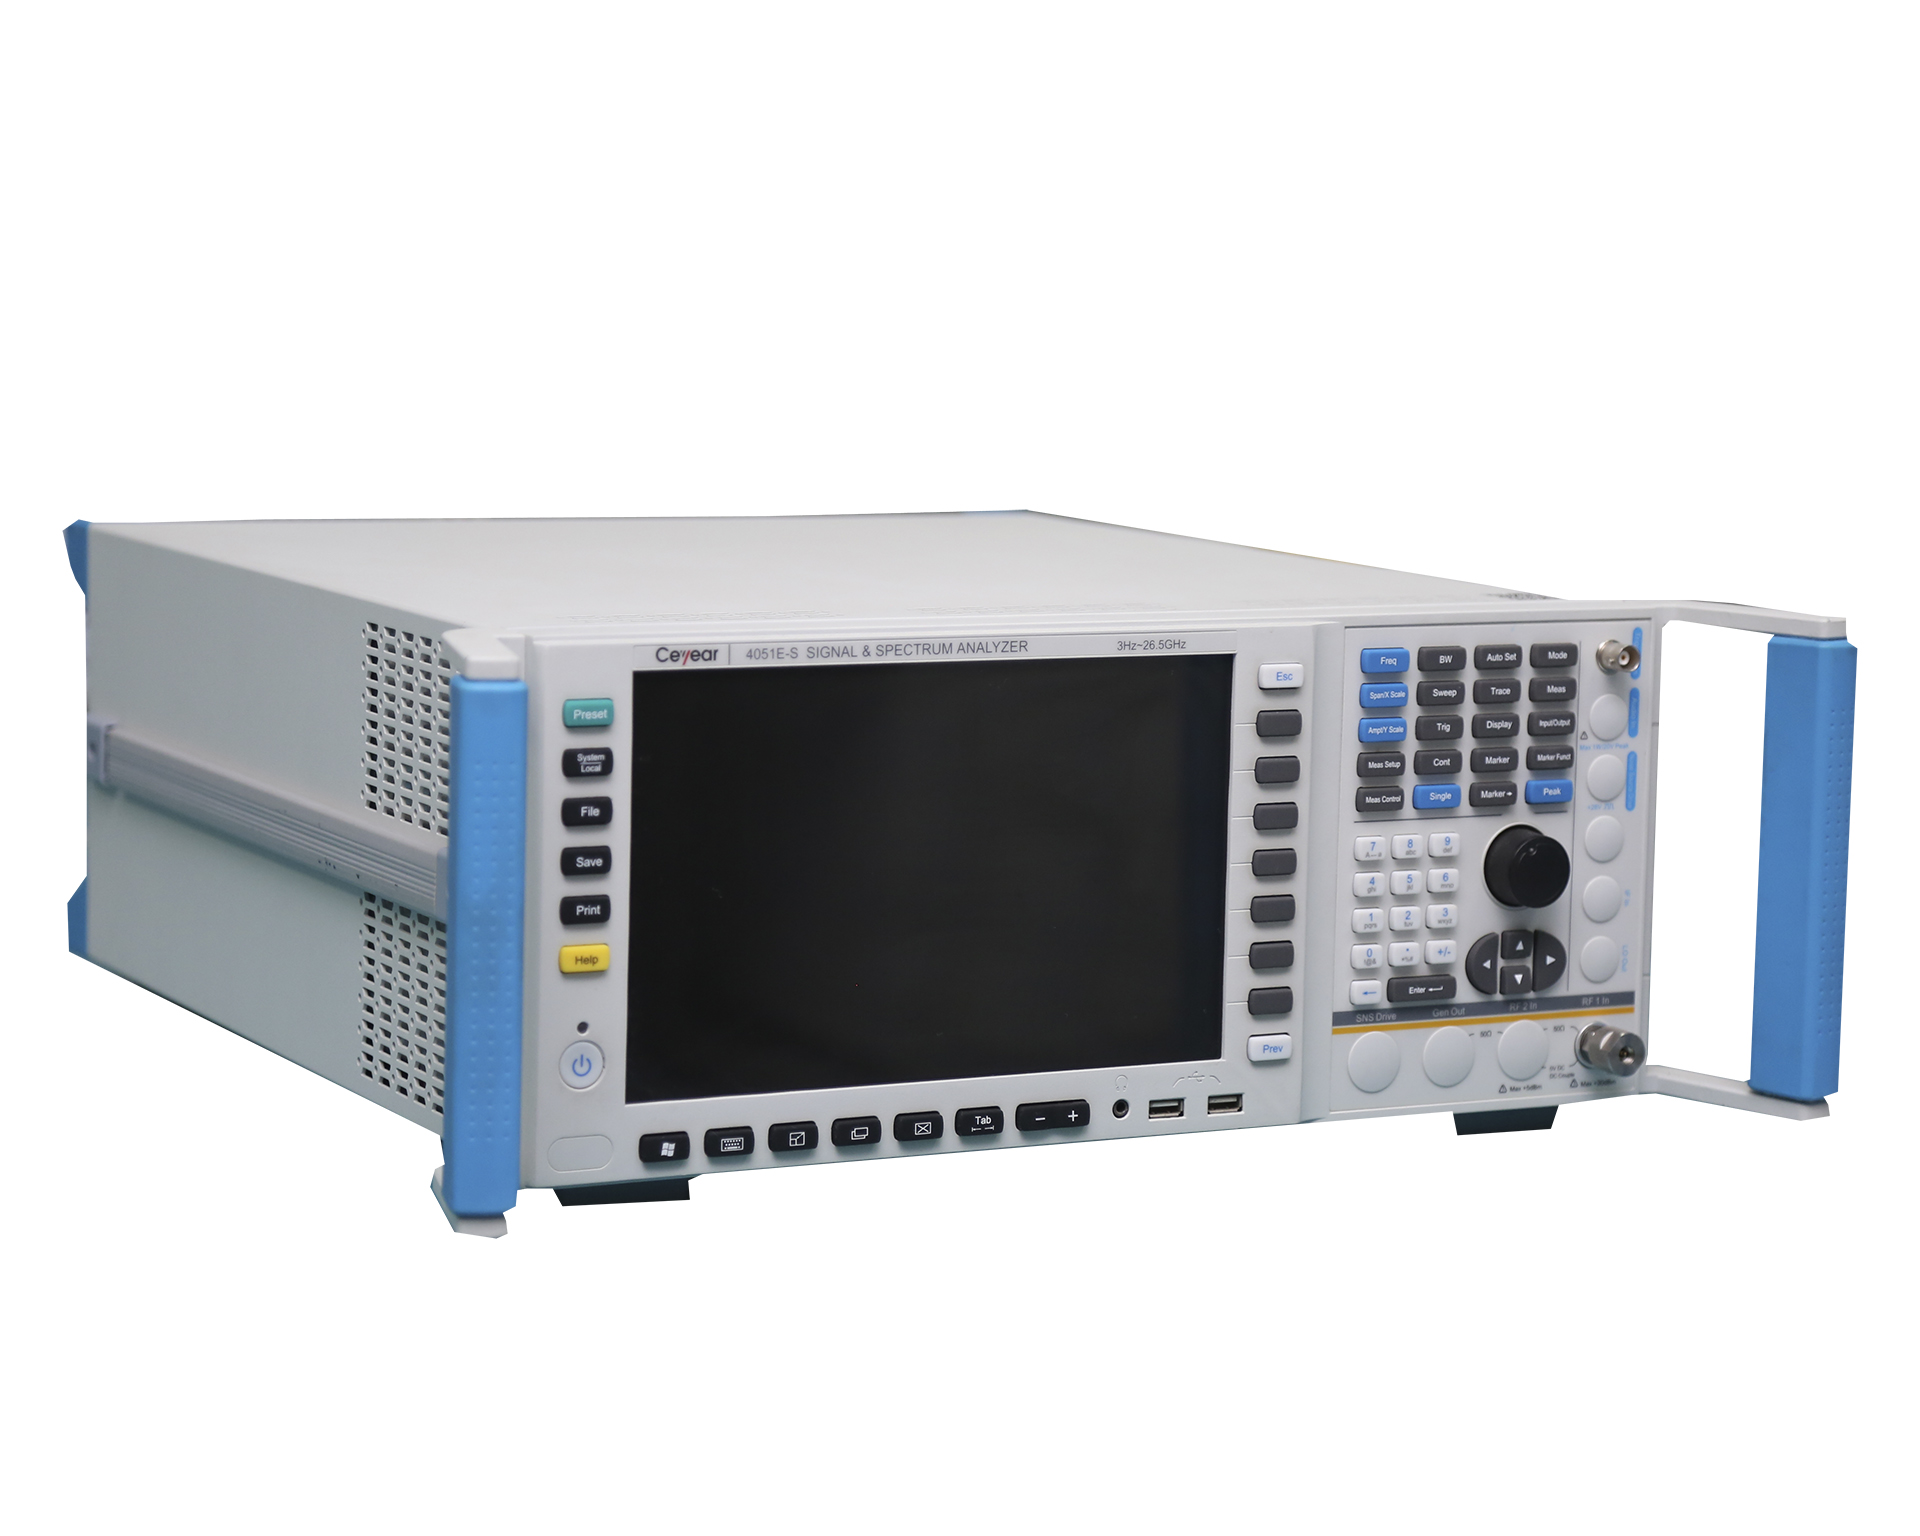 Анализаторы спектраCeyear серии 4051-S:4051A/B/C/D/E–Sс диапазоном частот от 3 Гц до 26,5 ГГц